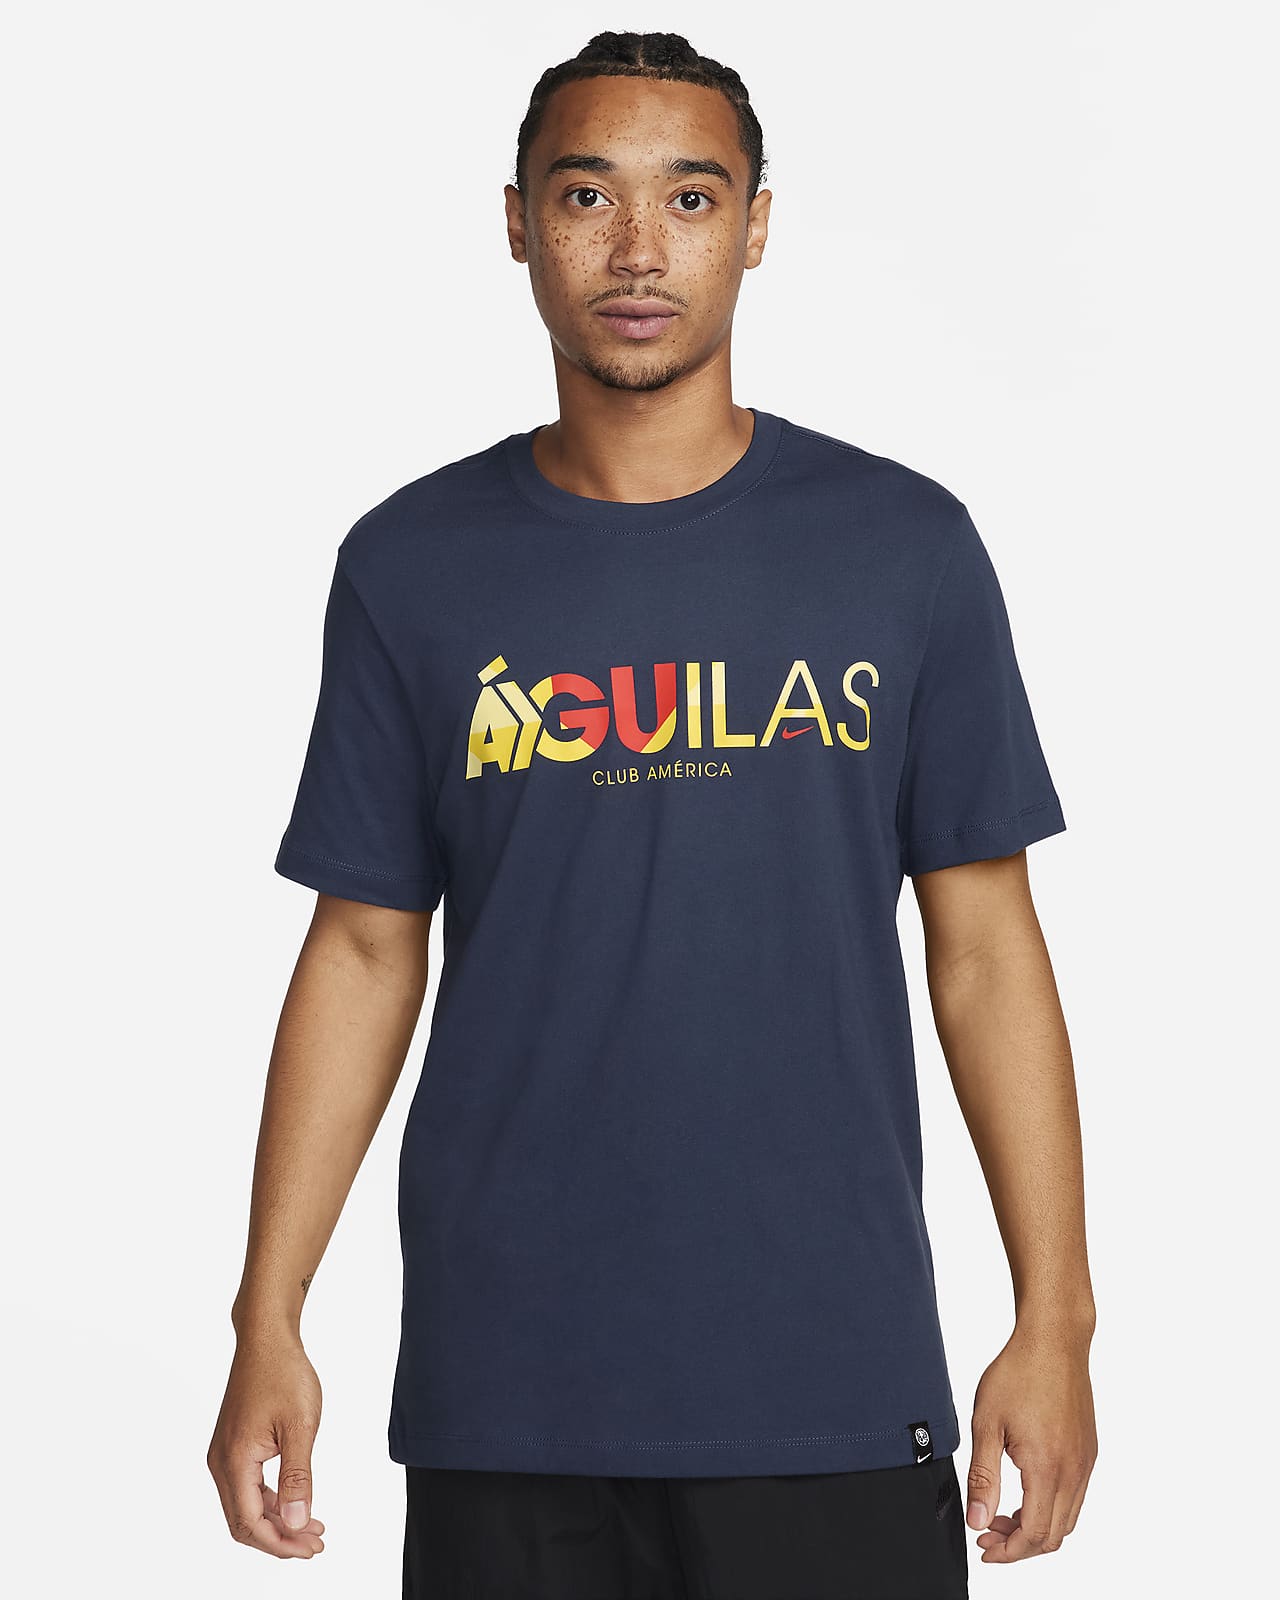 Club América Mercurial Men's Nike Soccer T-Shirt